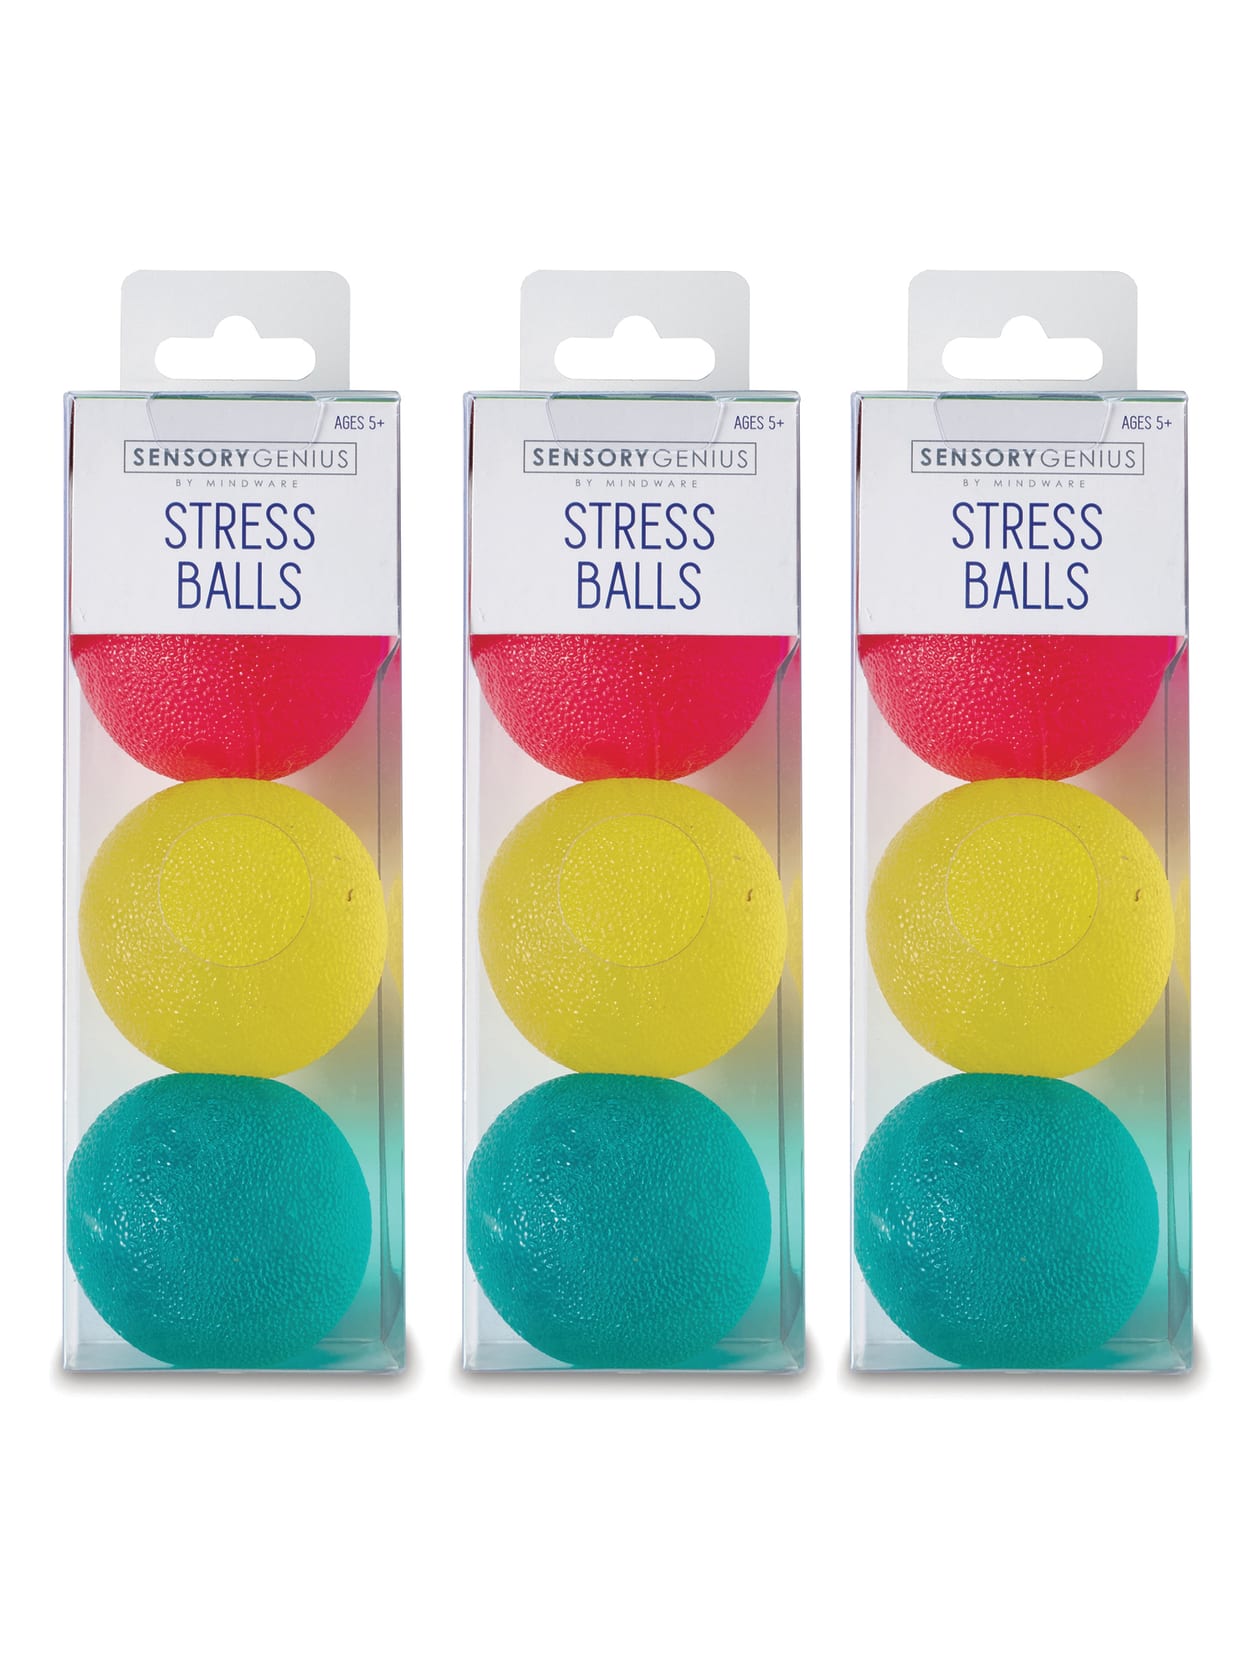 soft stress balls